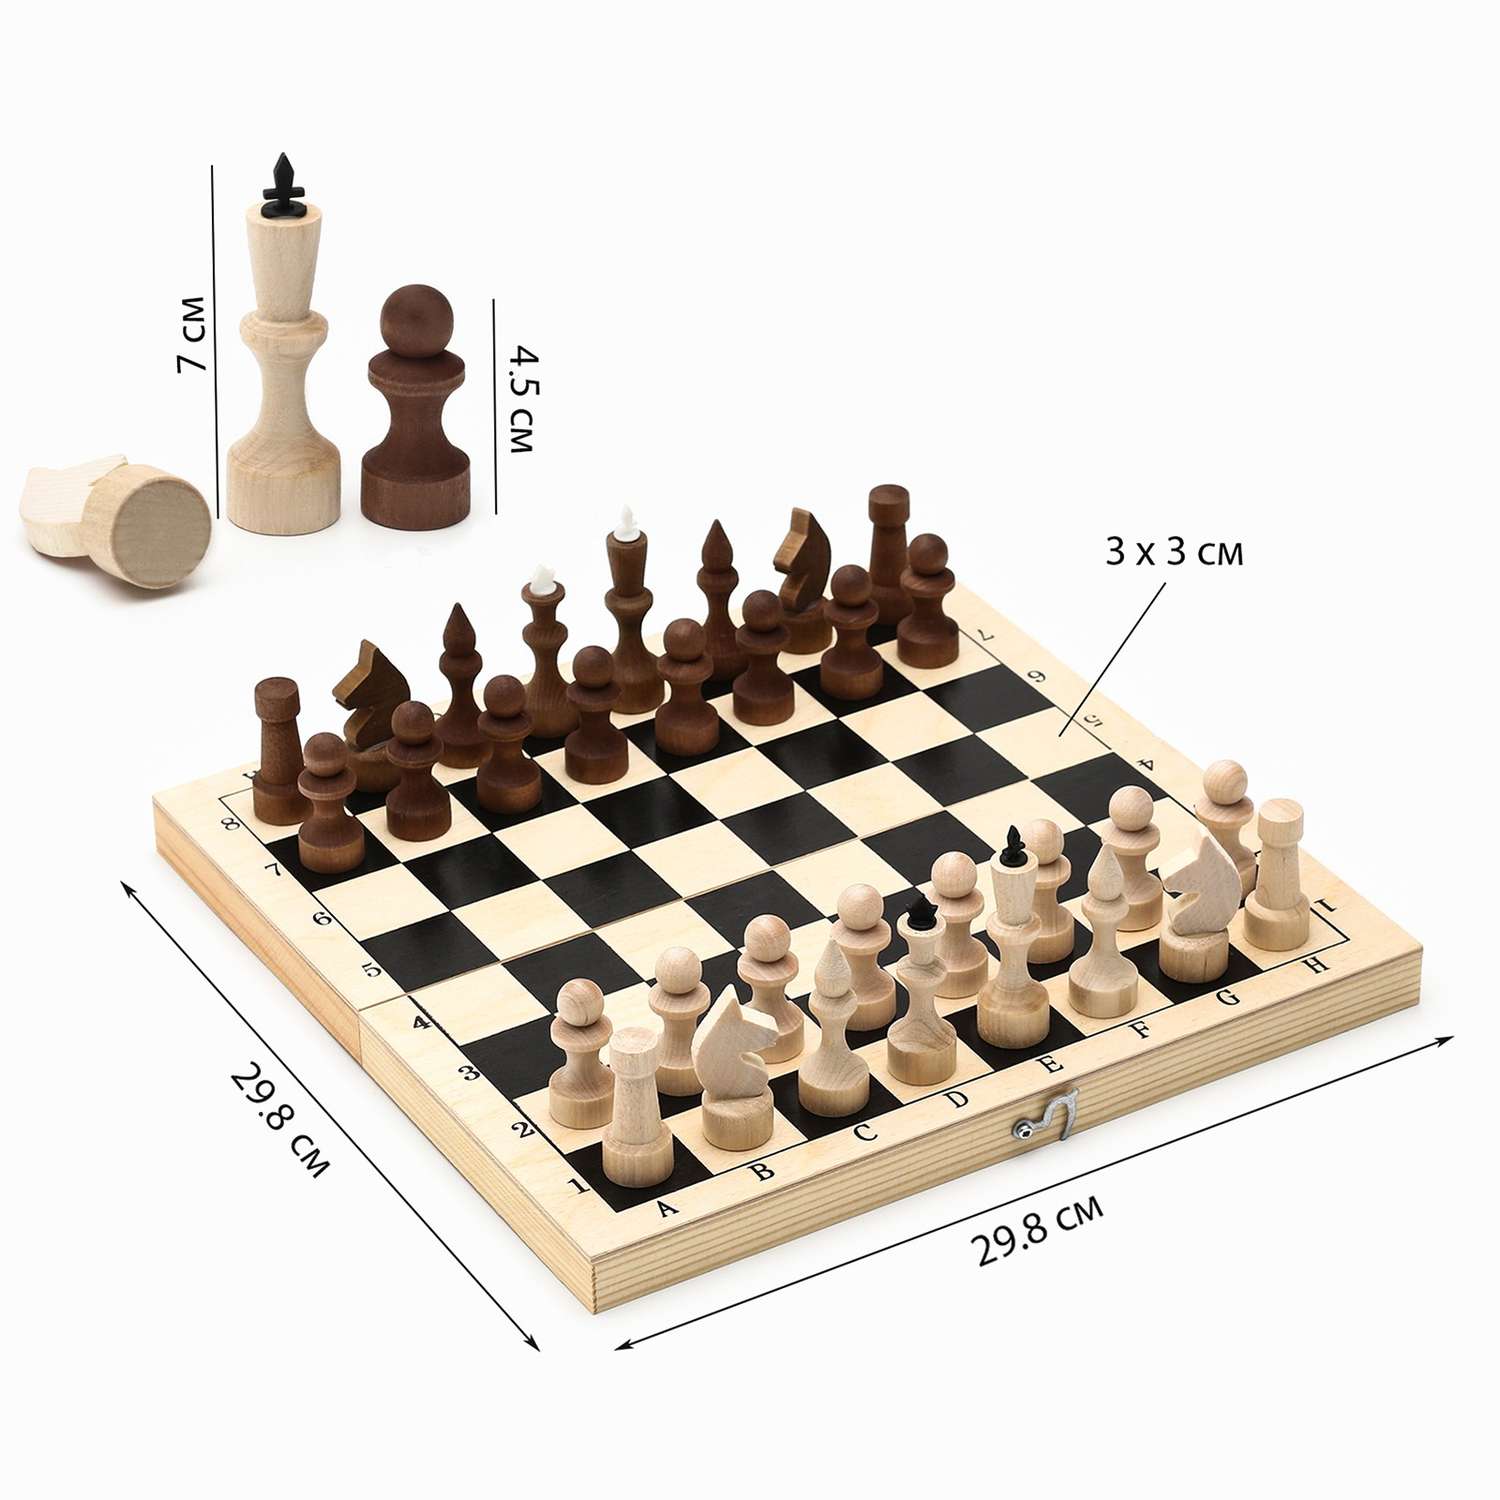 Шахматы Sima-Land «Основа» доска 29.8х29.8 см дерево король h 7.2 см пешка h 4.5 см - фото 1